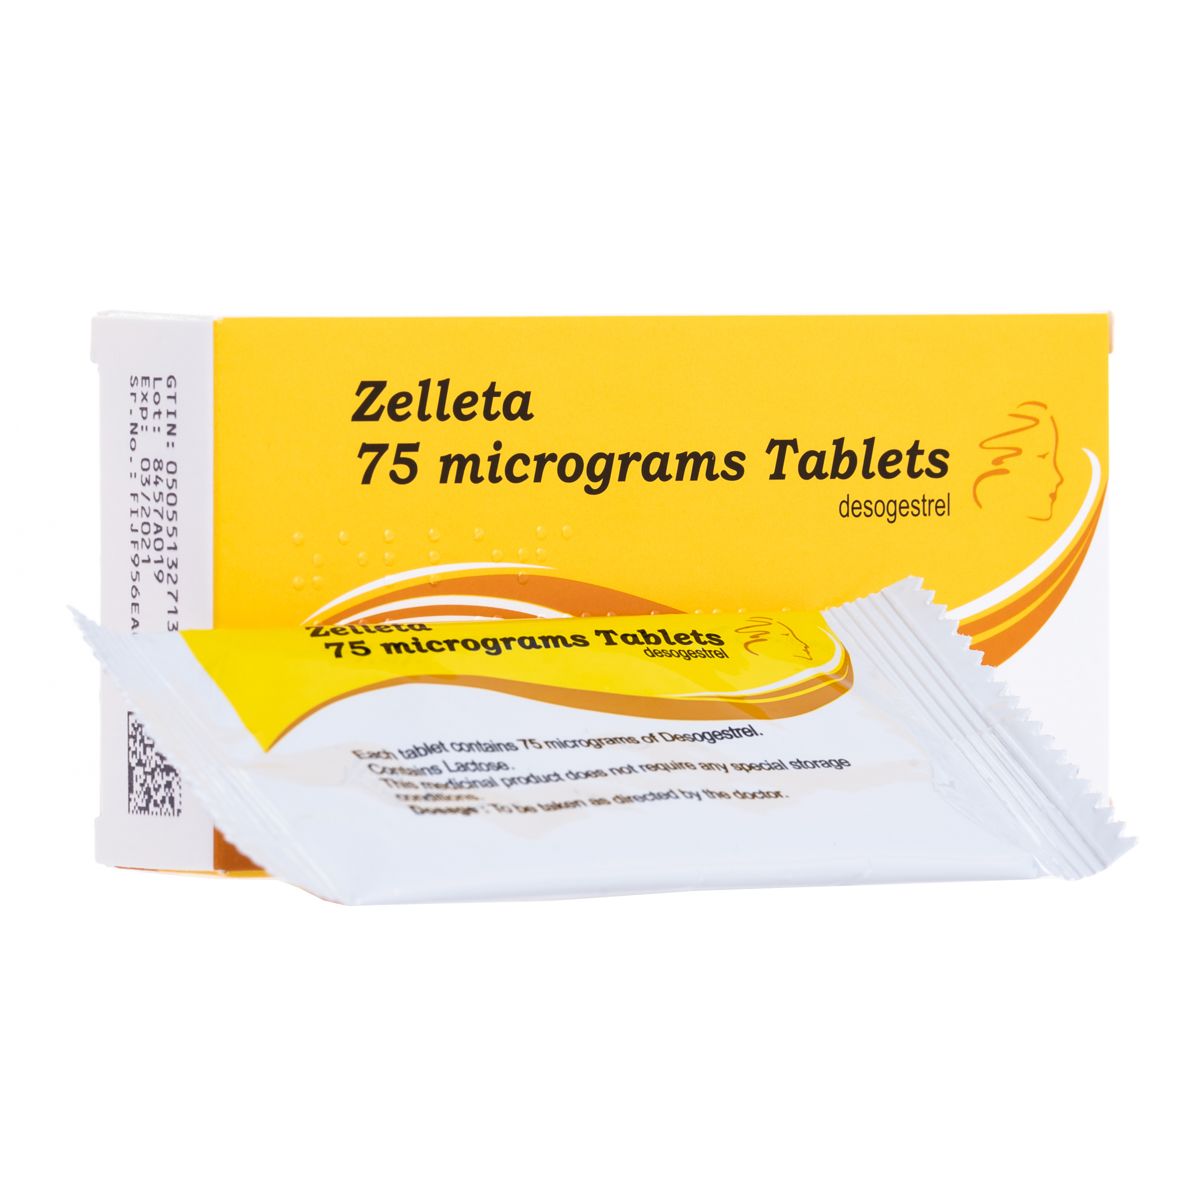 Buy Zelleta | 24Hr Service Online | PillDoctor GH